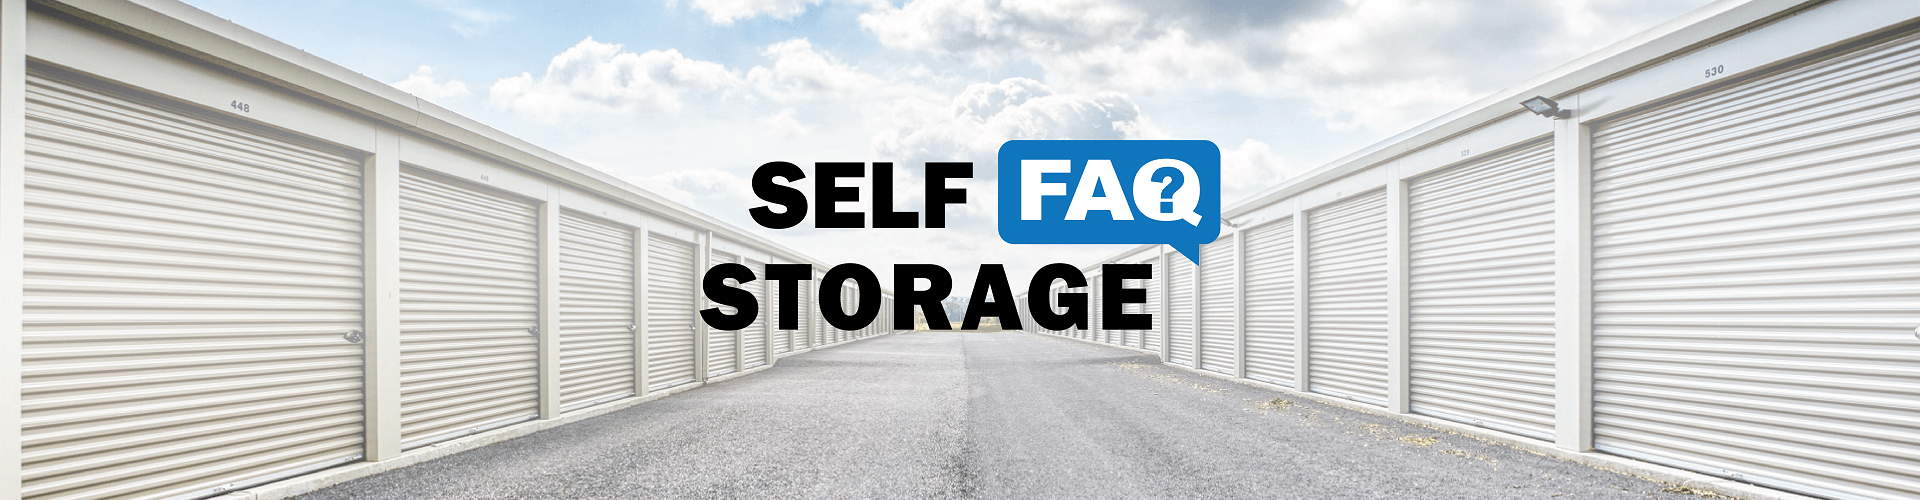 422 Storage - self storage FAQ